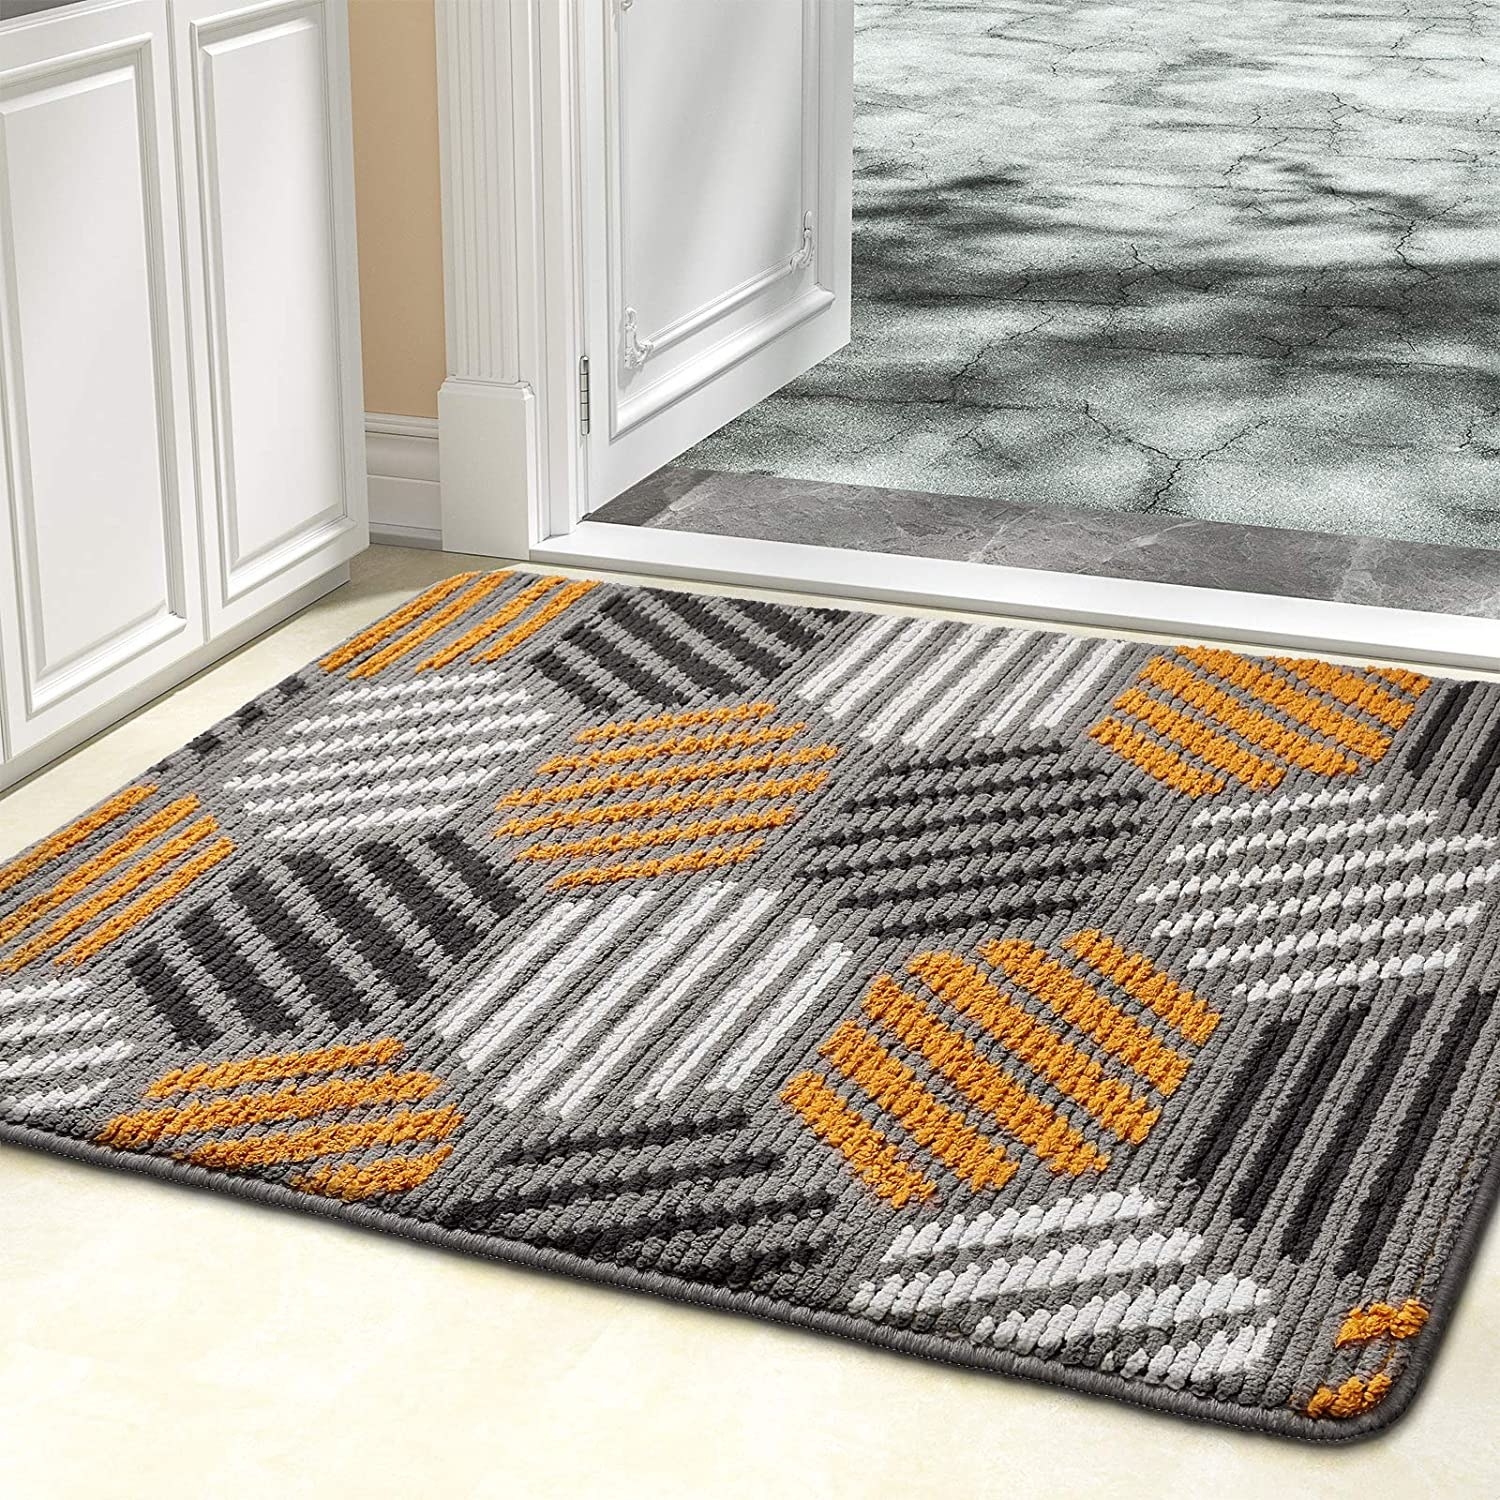 A geometric print door mat